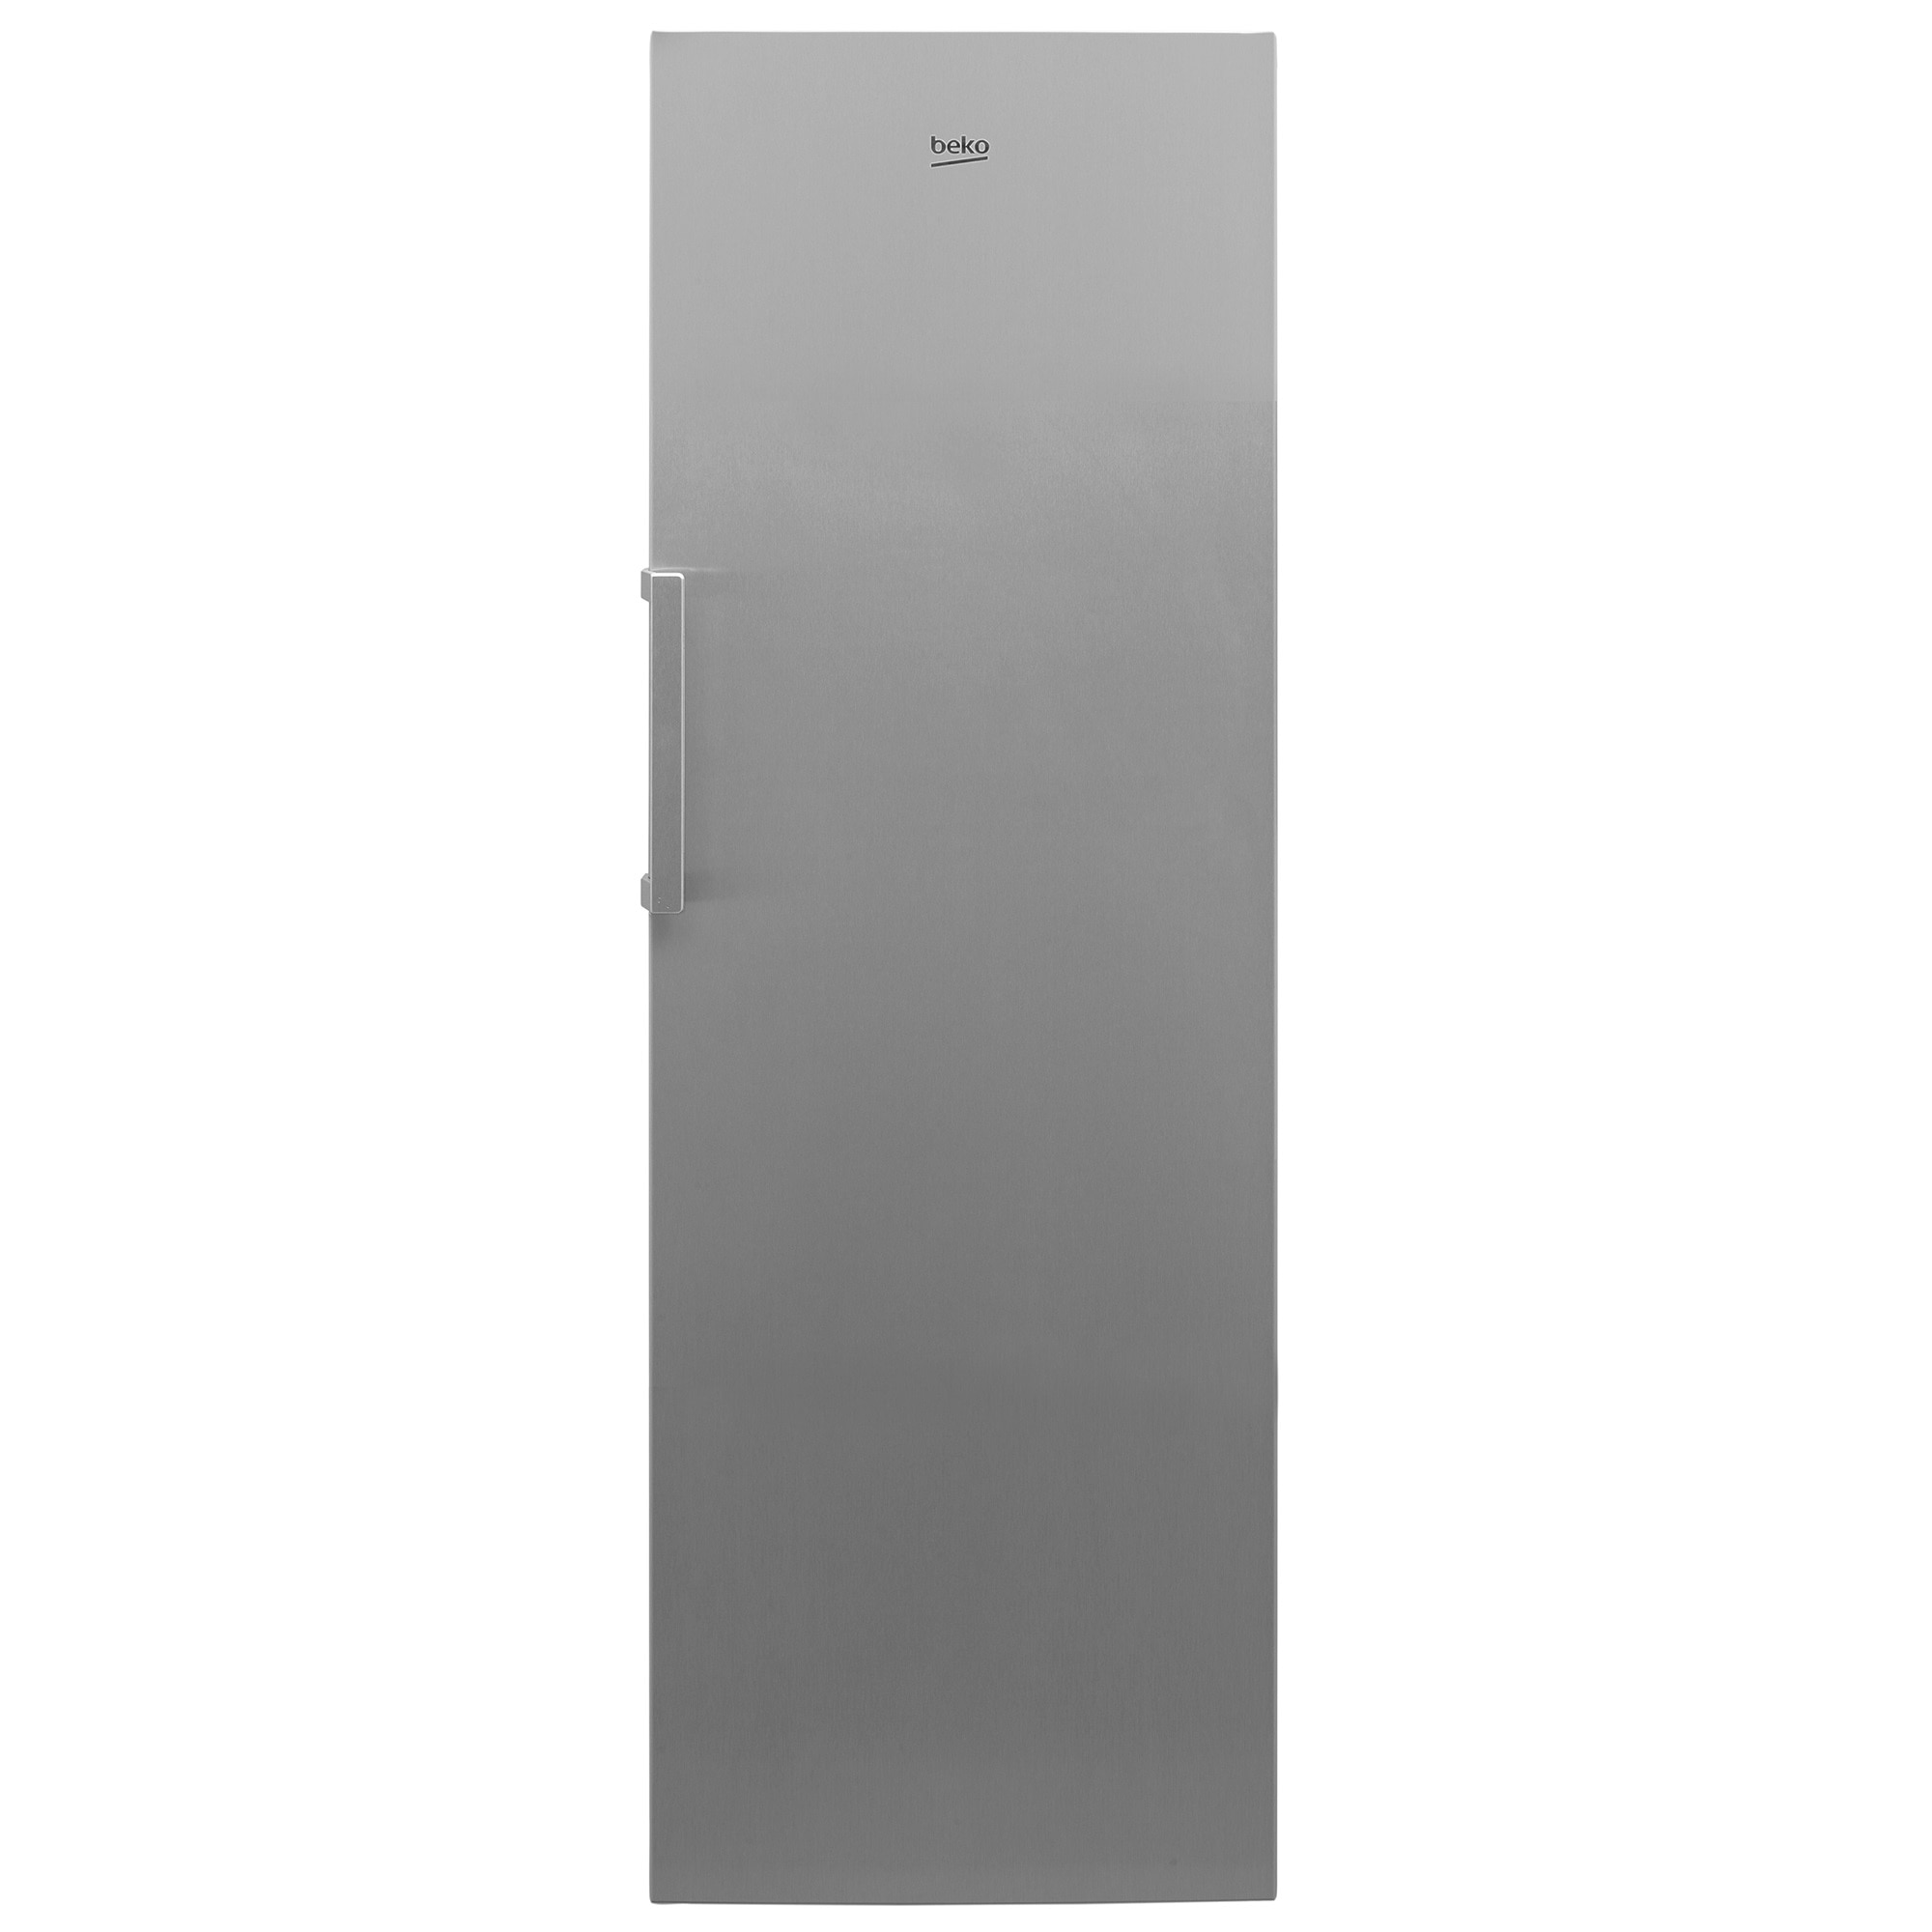 Хладилник Beko RSSA445K21XP с обем от 402 л.